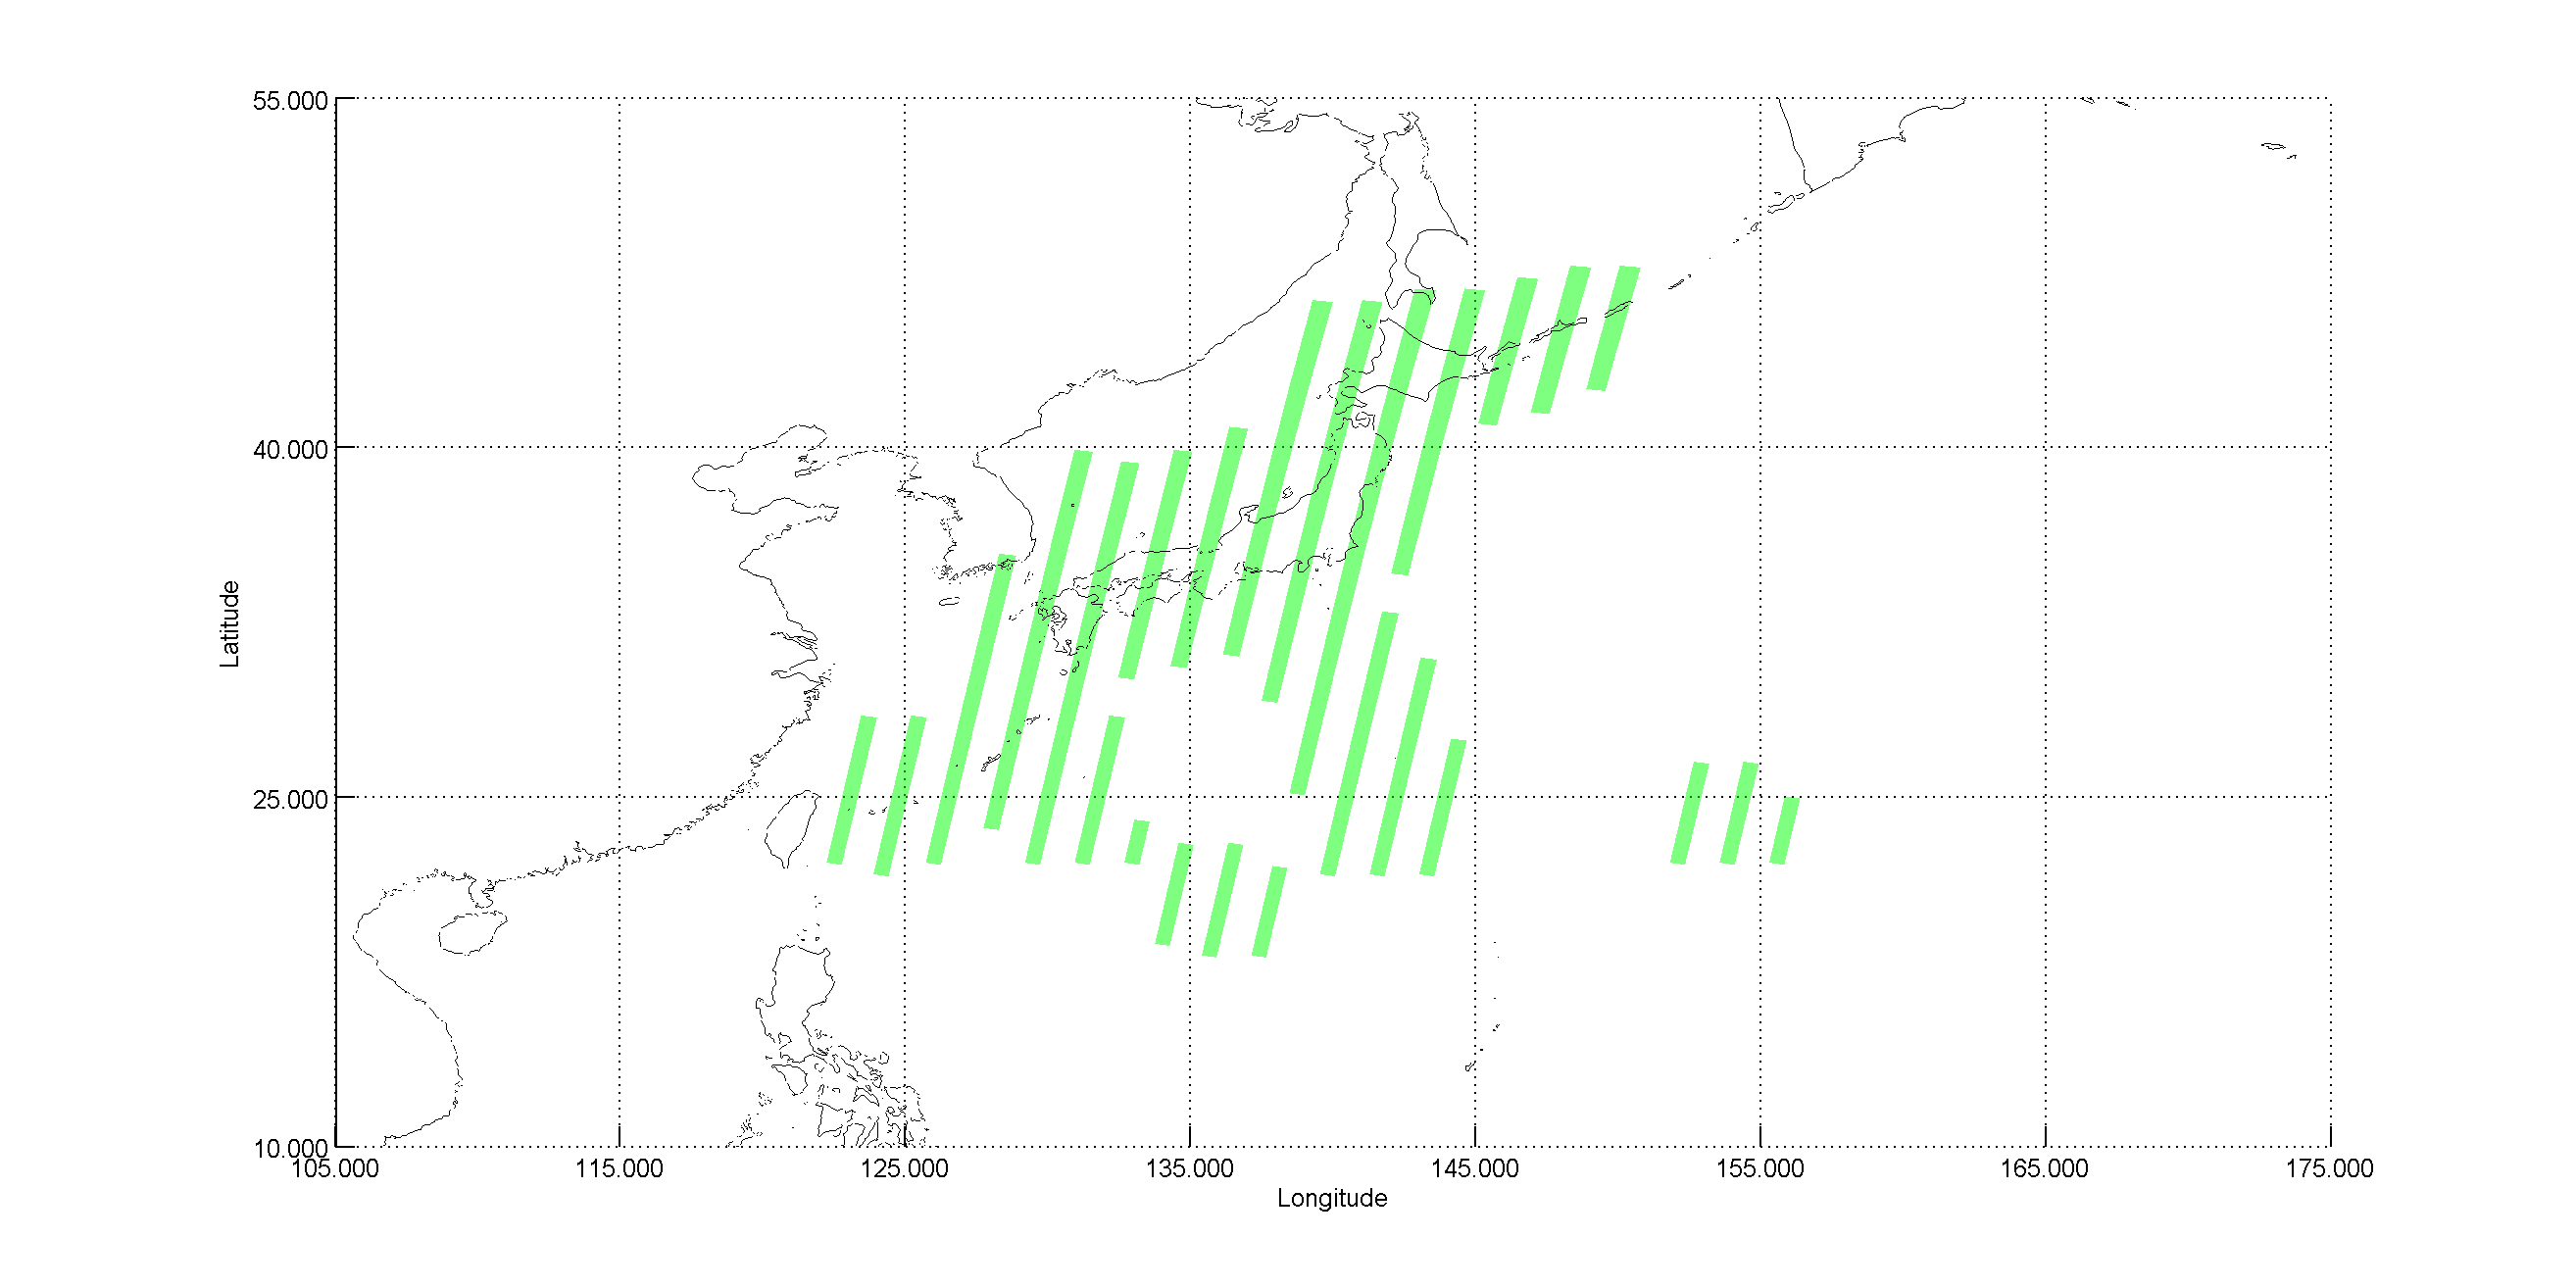 CYCLE_135 - Japan Descending passes